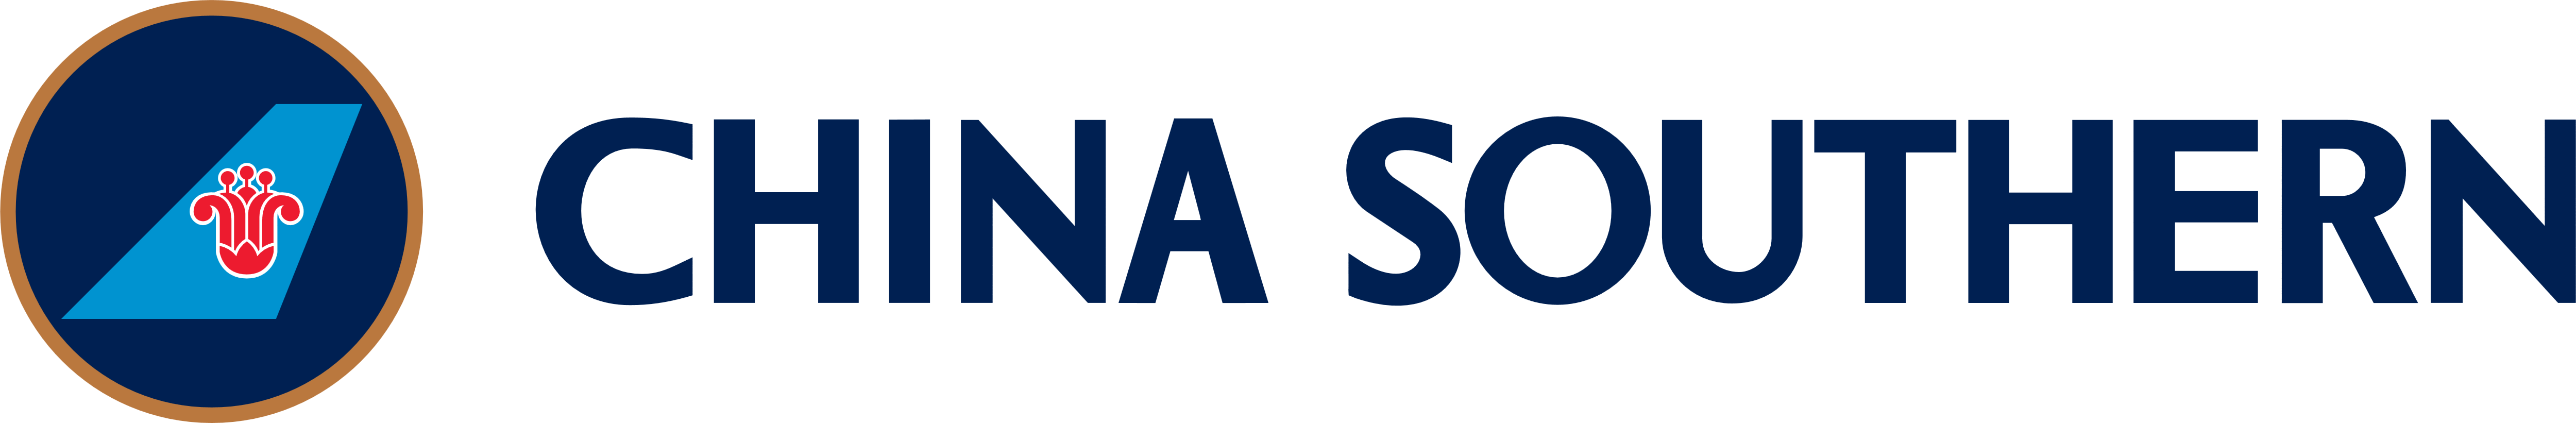 China-Southern Airlines logotype, emblem logo 2